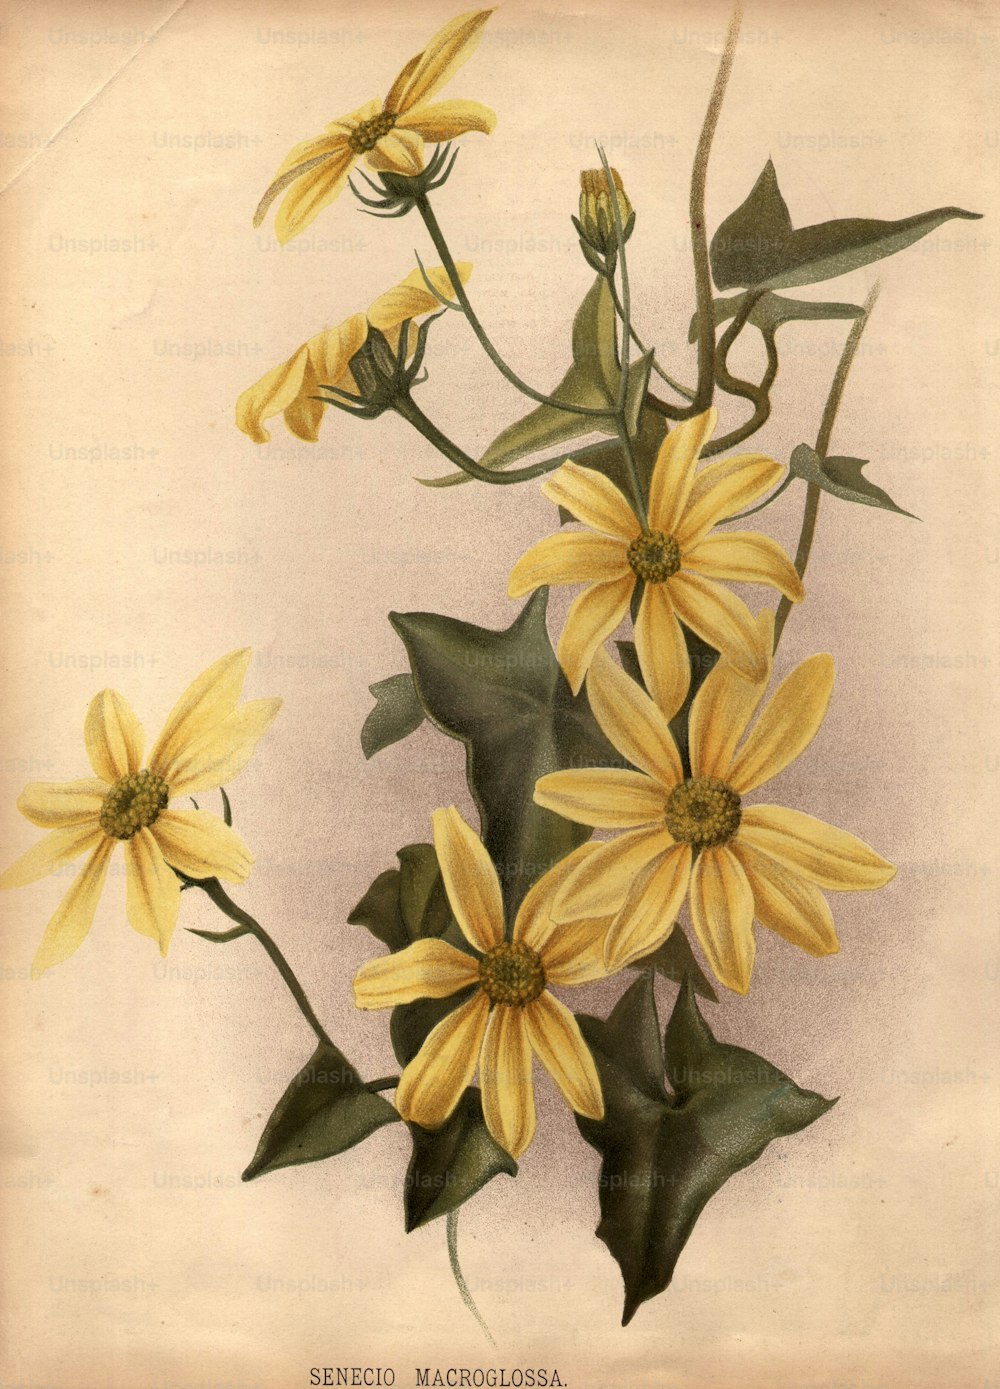 vers 1800 : Les fleurs jaunes du senecio macroglossa.  (Photo d’Edward Gooch/Edward Gooch/Getty Images)